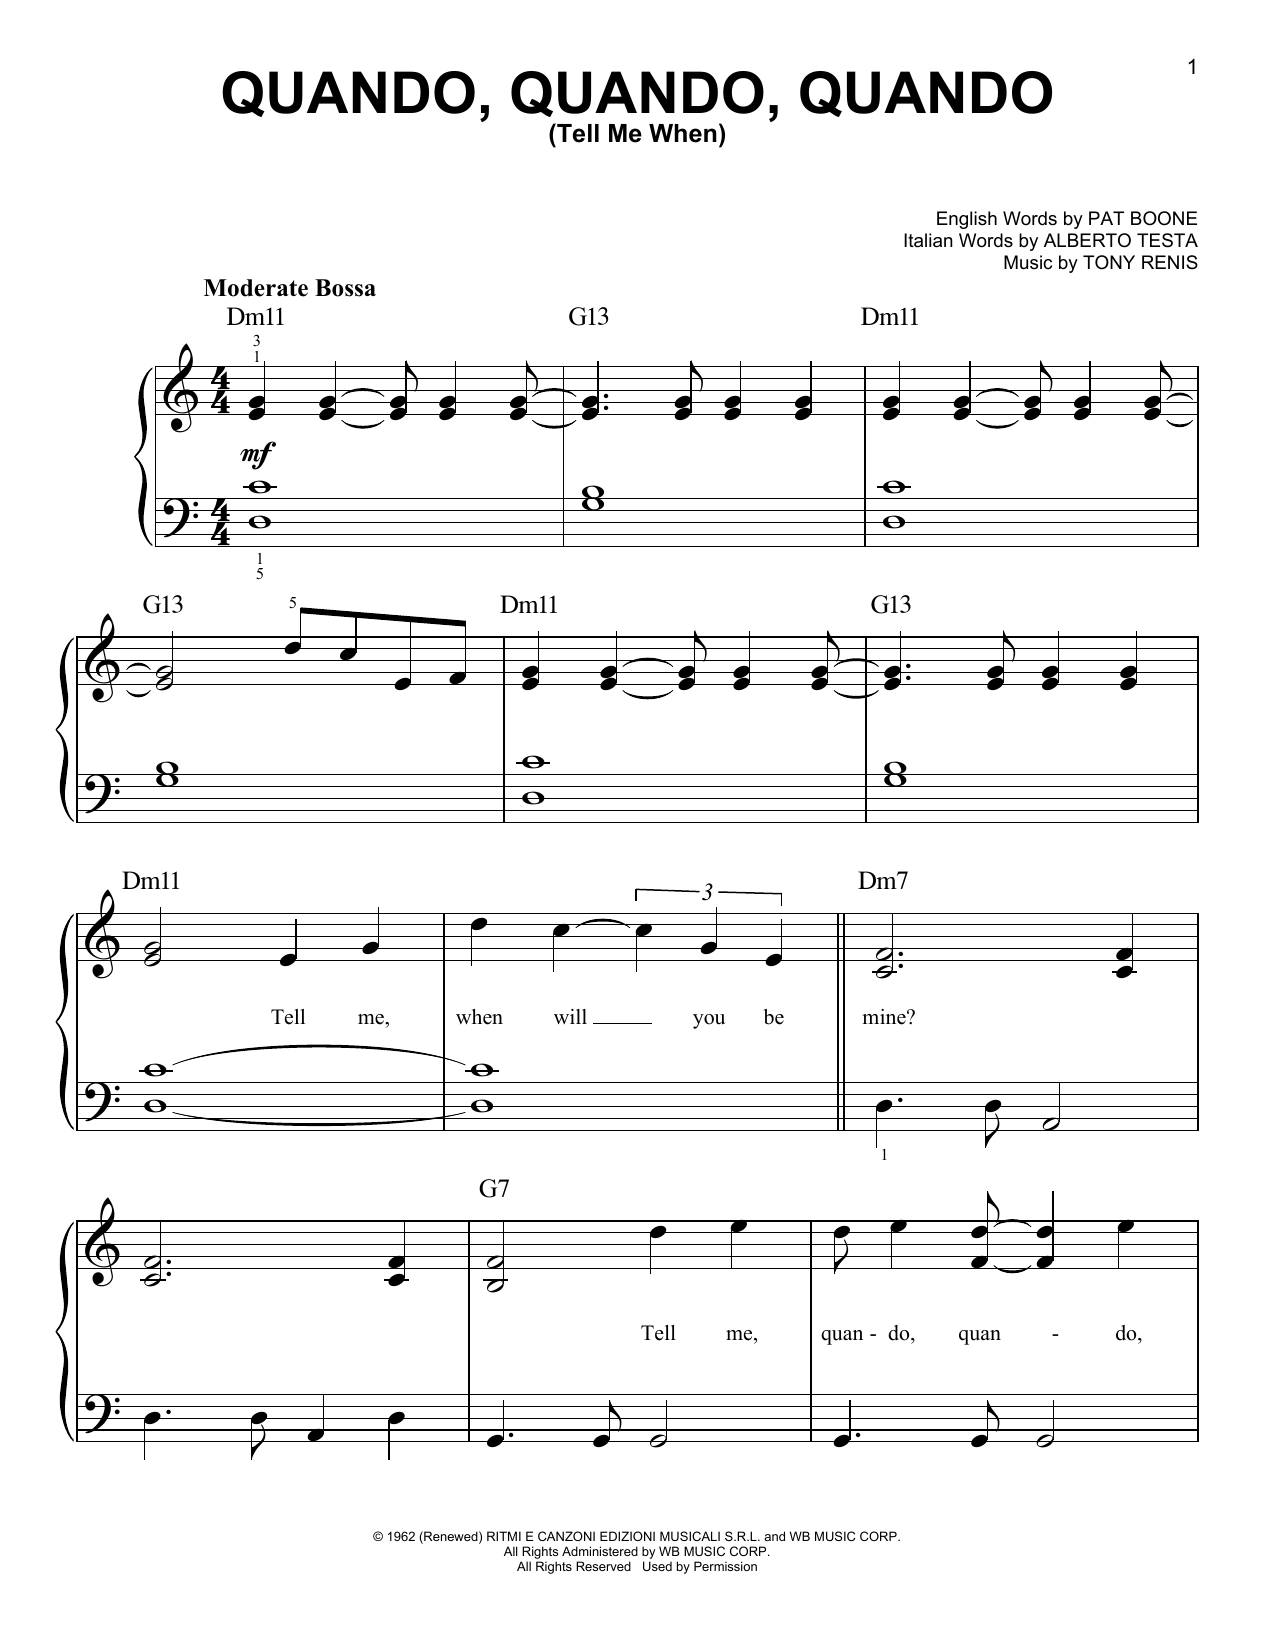 Tony Renis Quando, Quando, Quando (Tell Me When) Sheet Music Notes & Chords for Very Easy Piano - Download or Print PDF